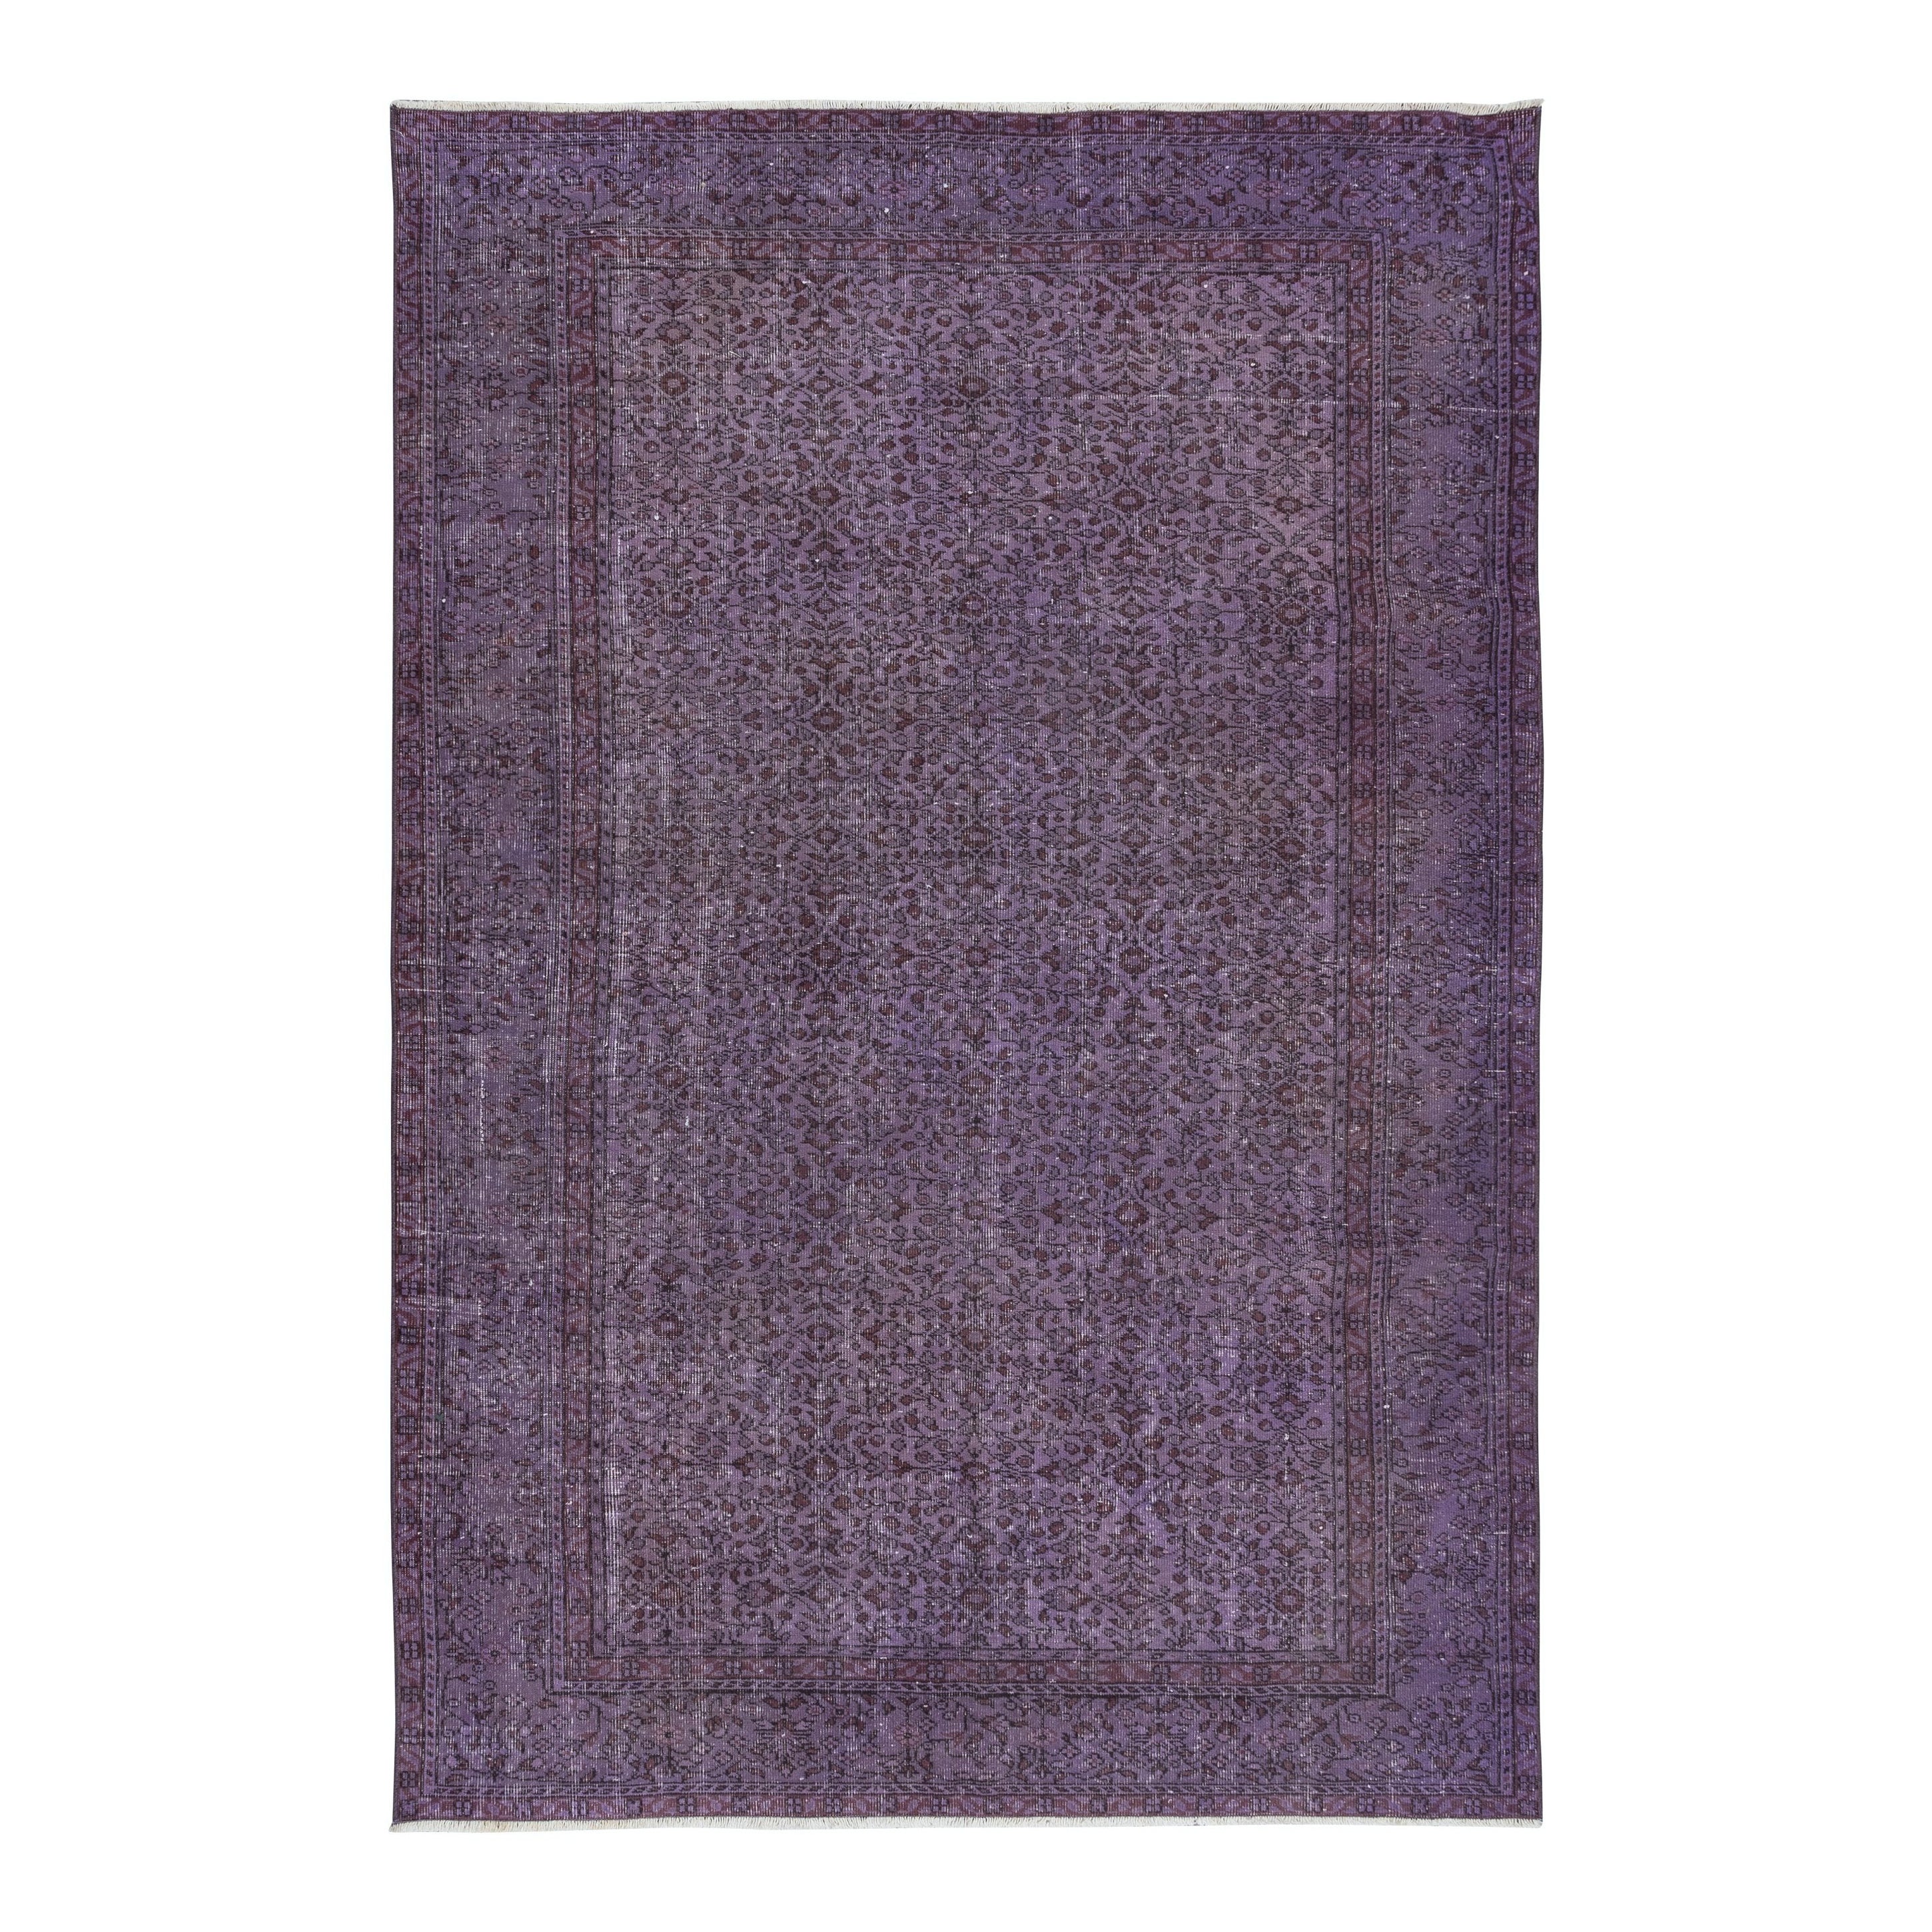 6.2x9.3 Ft Splendid Handmade Turkish Rug with Flower Design & Purple Background For Sale